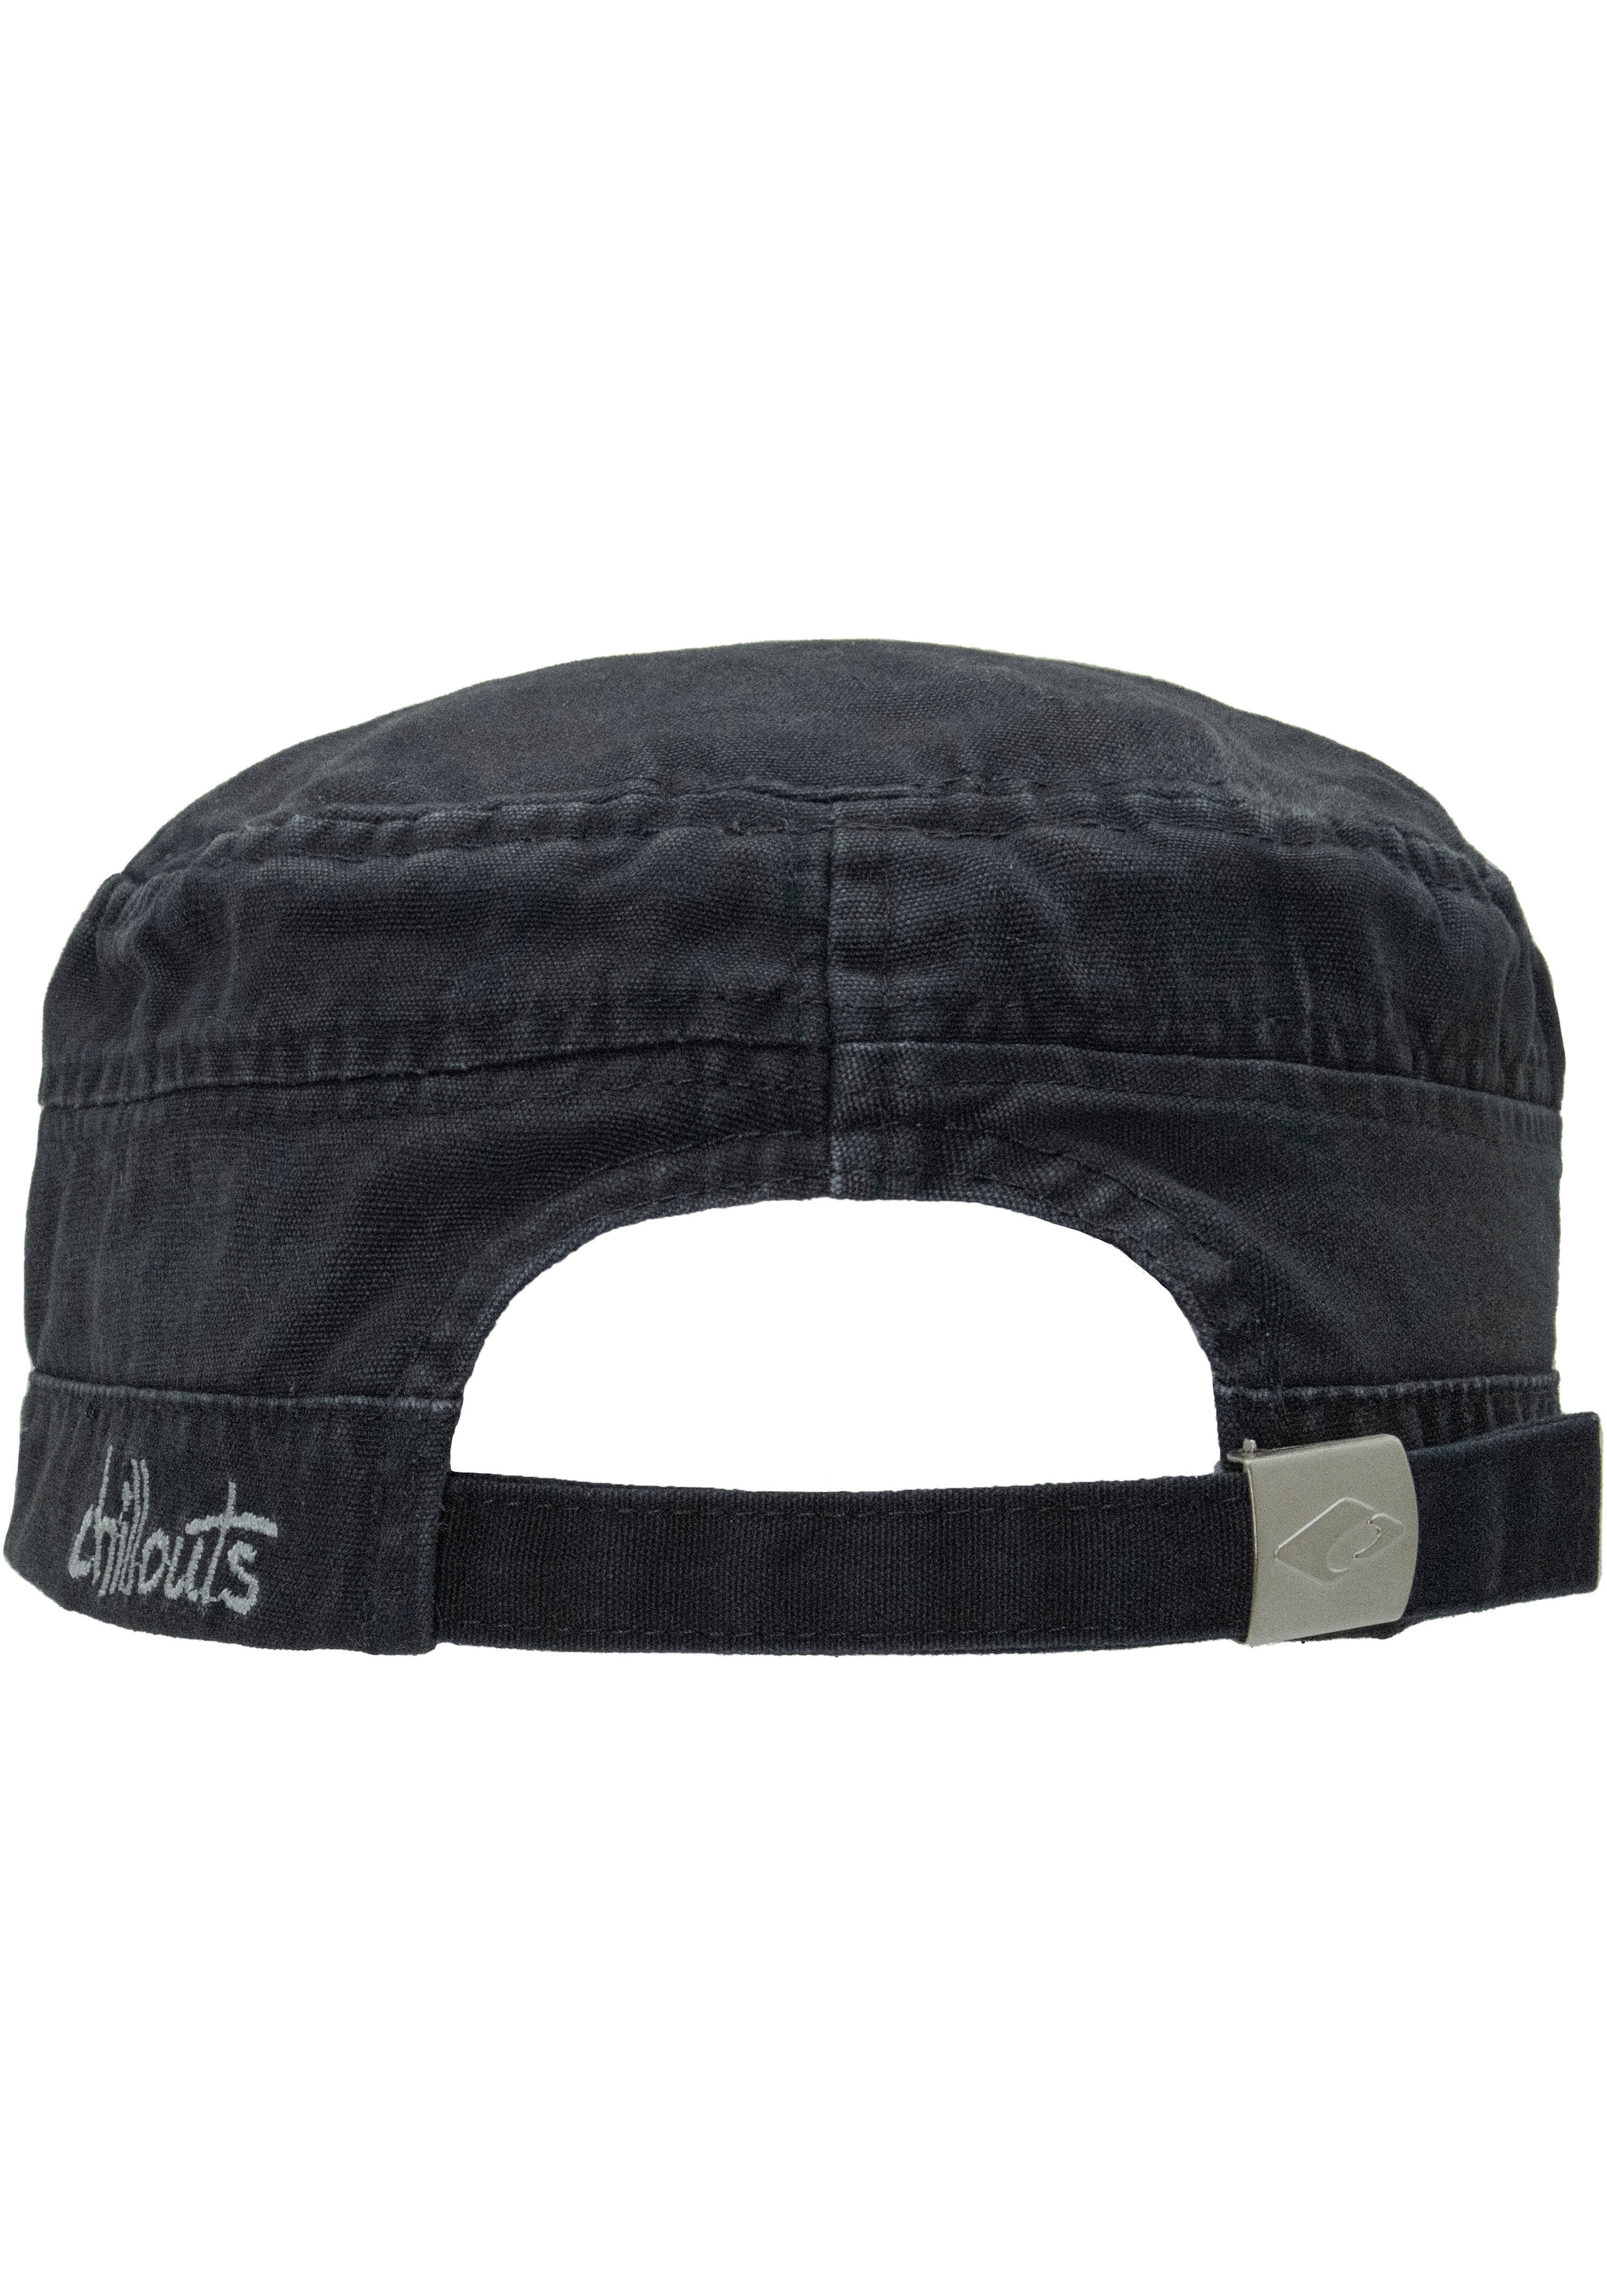 chillouts Army Cap »El Paso online aus Size One shoppen bei reiner atmungsaktiv, OTTO Hat«, Baumwolle